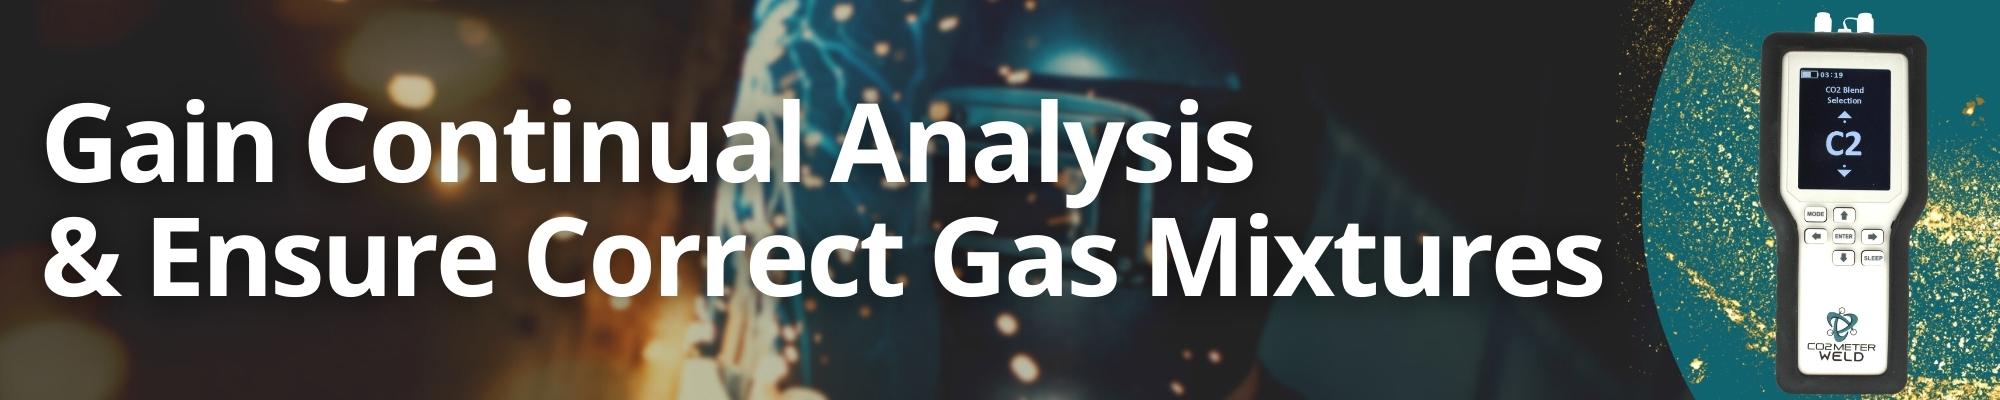 Gain continual analysis and ensure correct gas mixtures